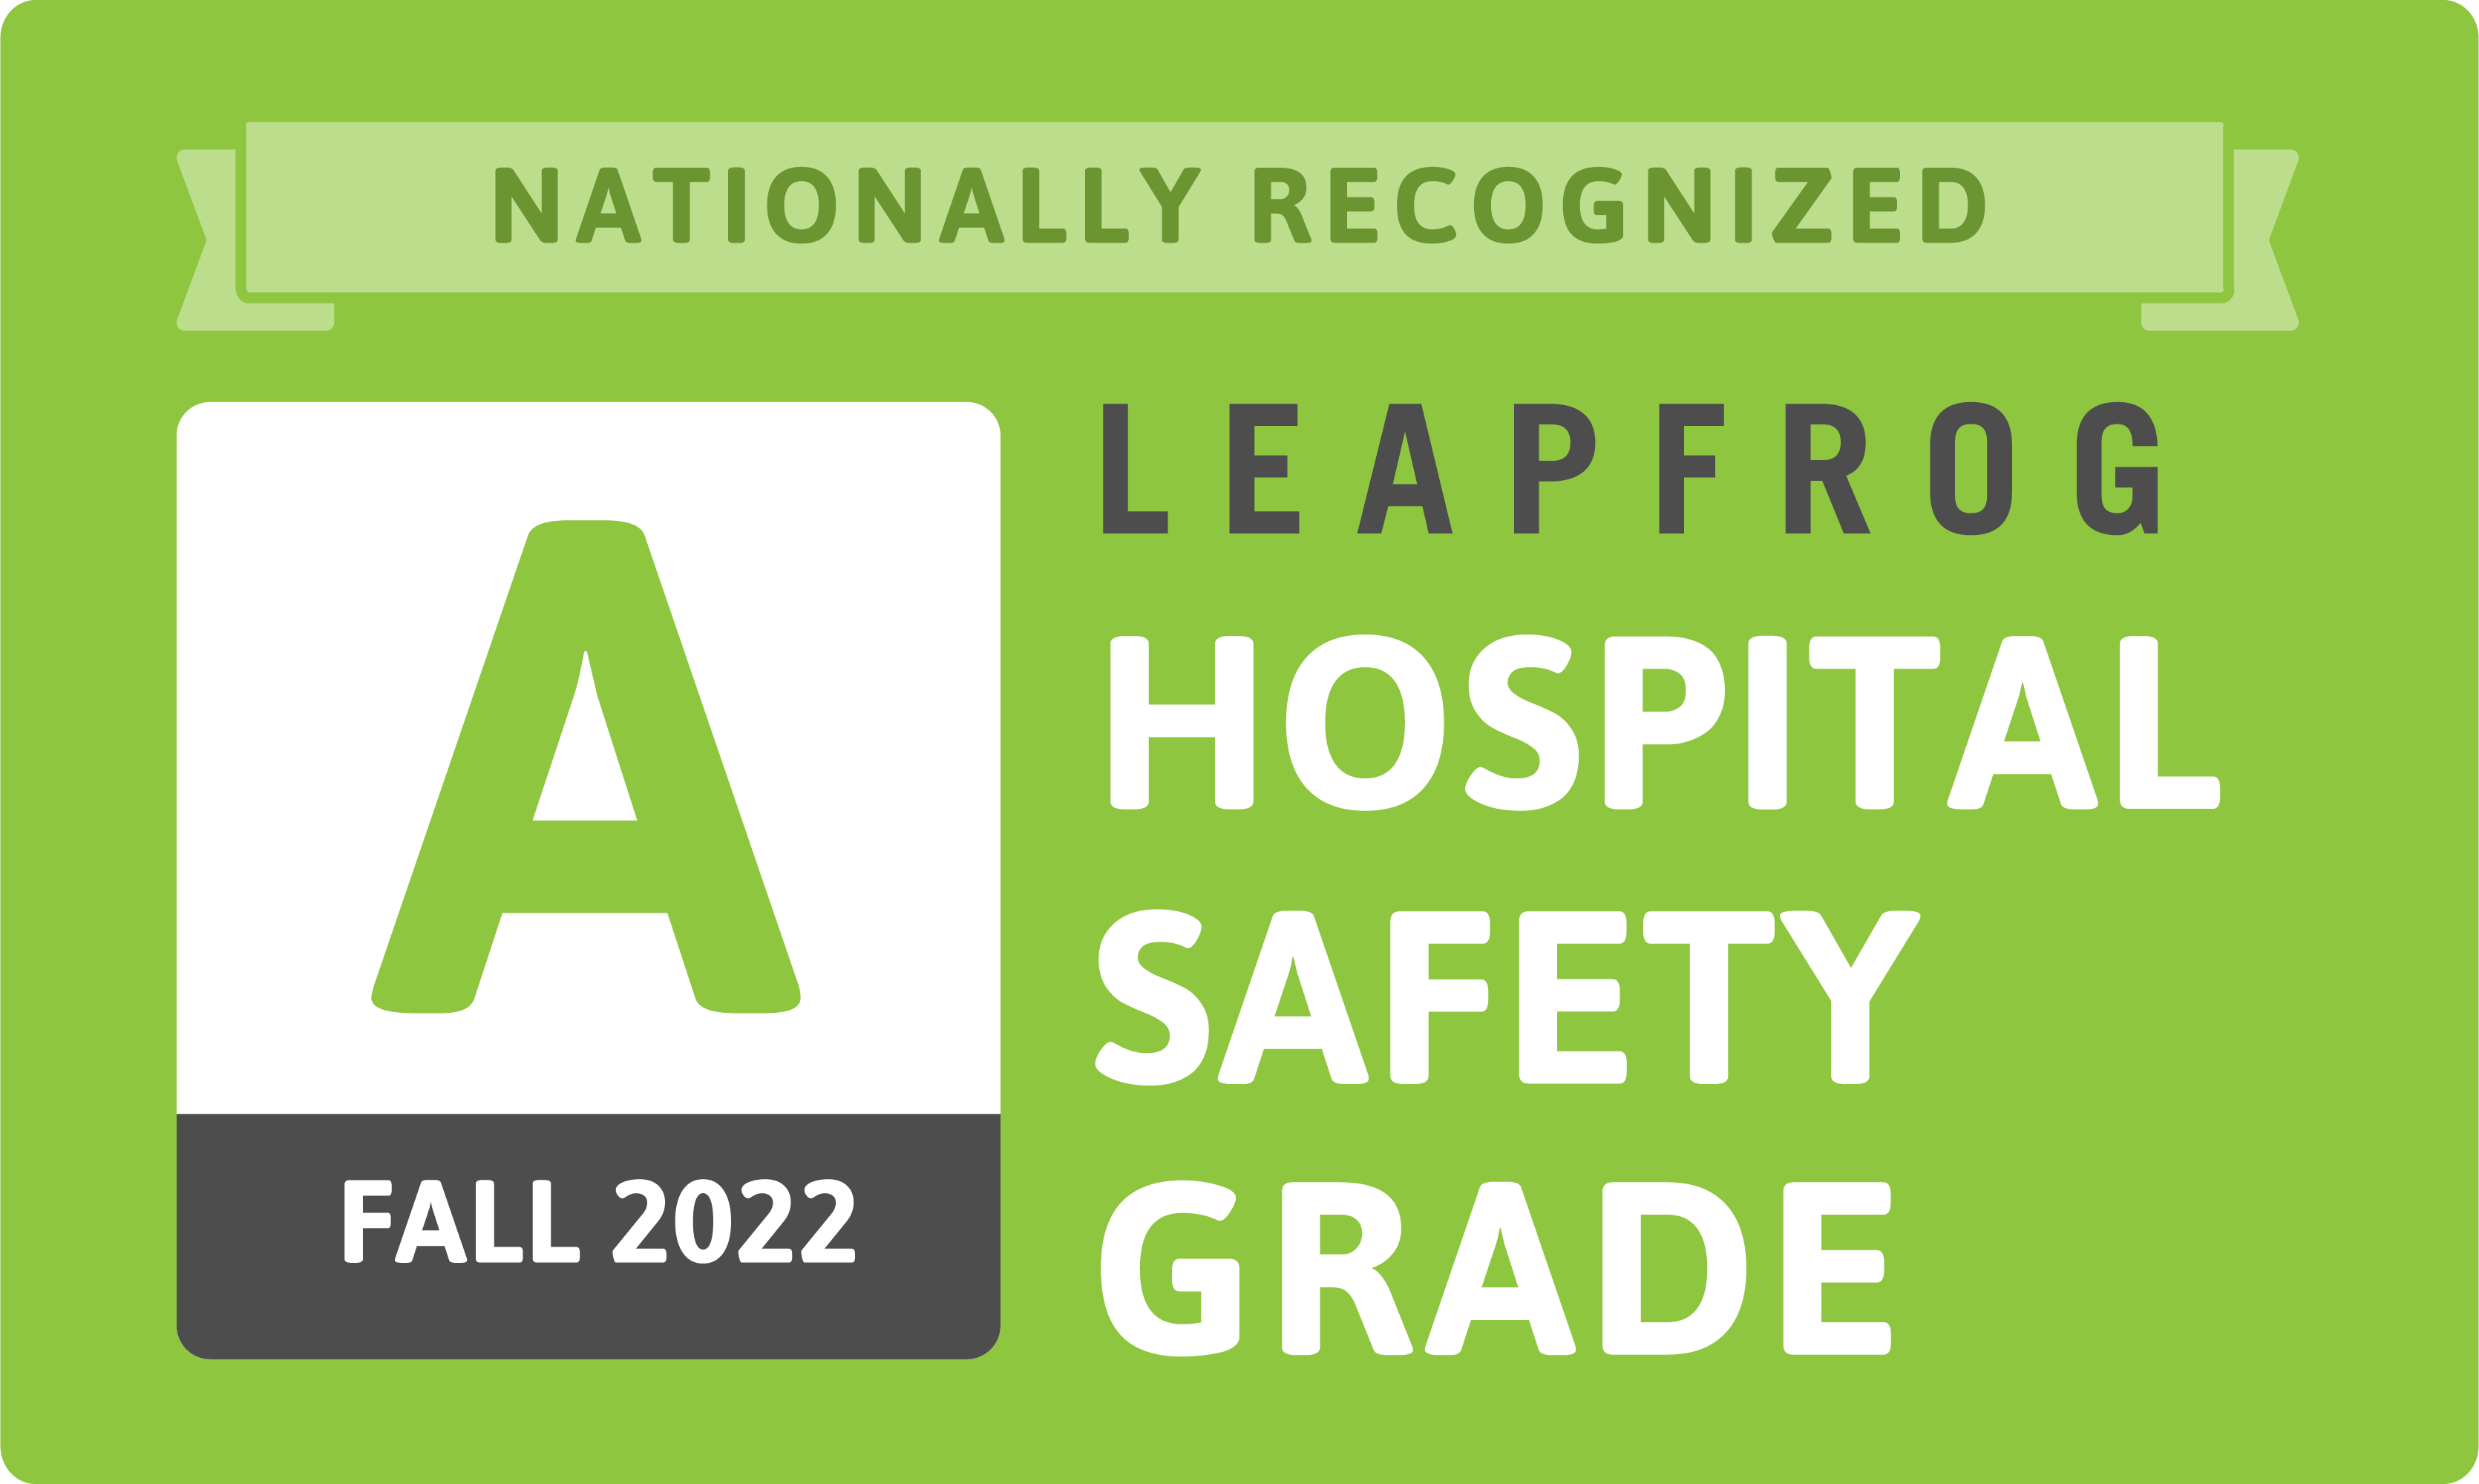 Nationally recognized - Leapfrog hospital safety grade